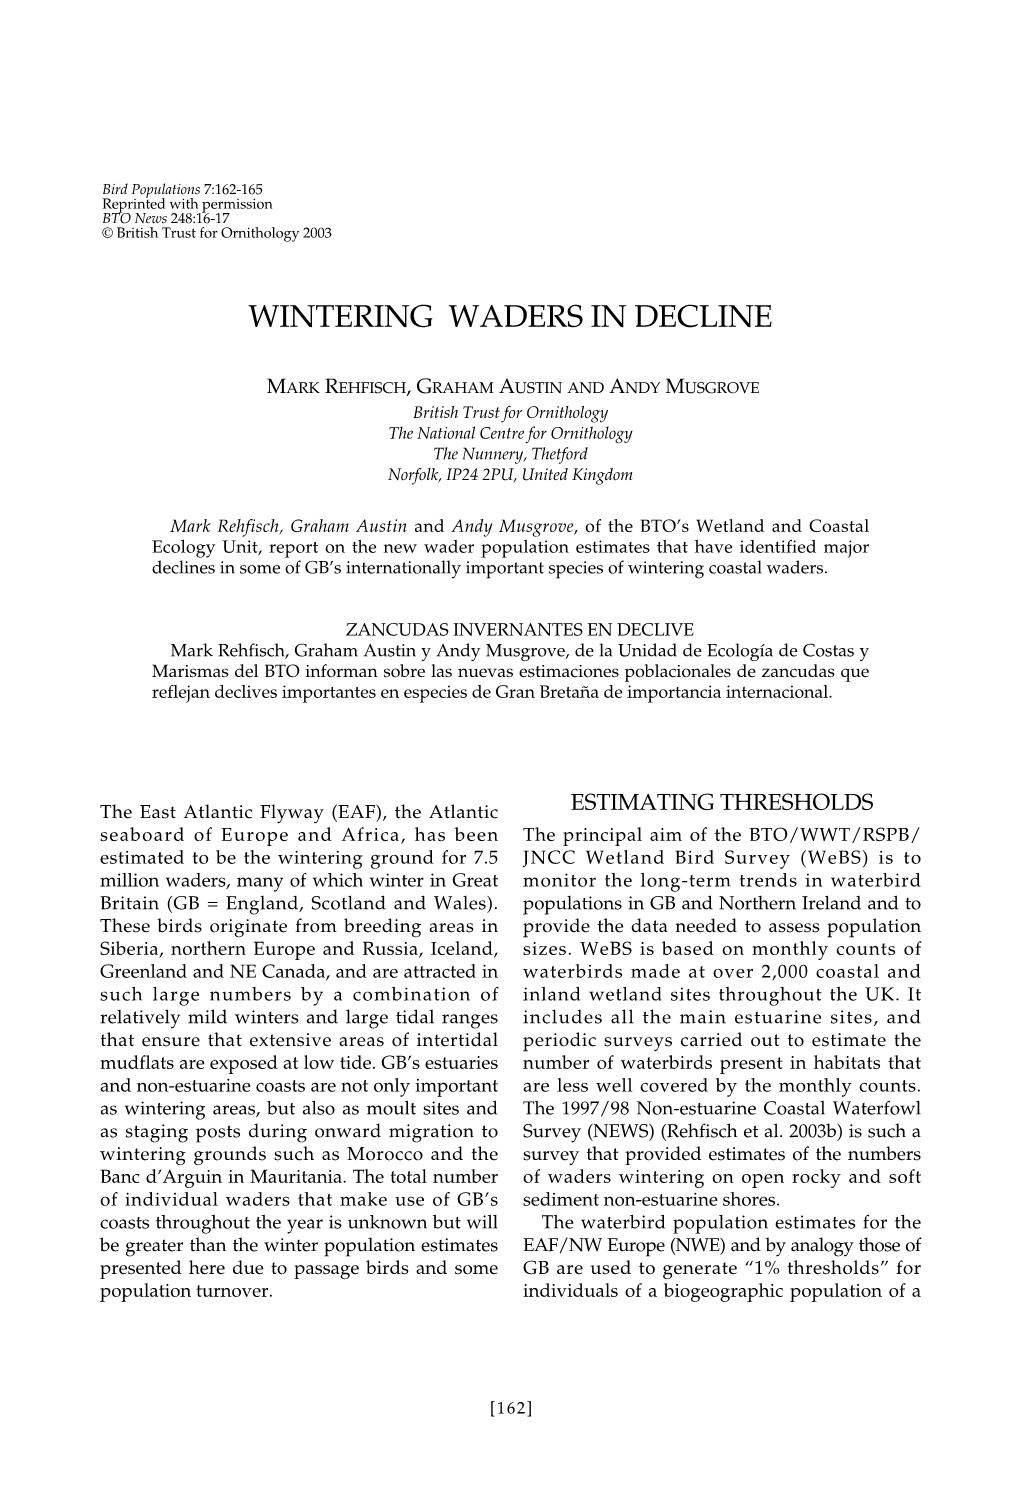 Wintering Waders in Decline